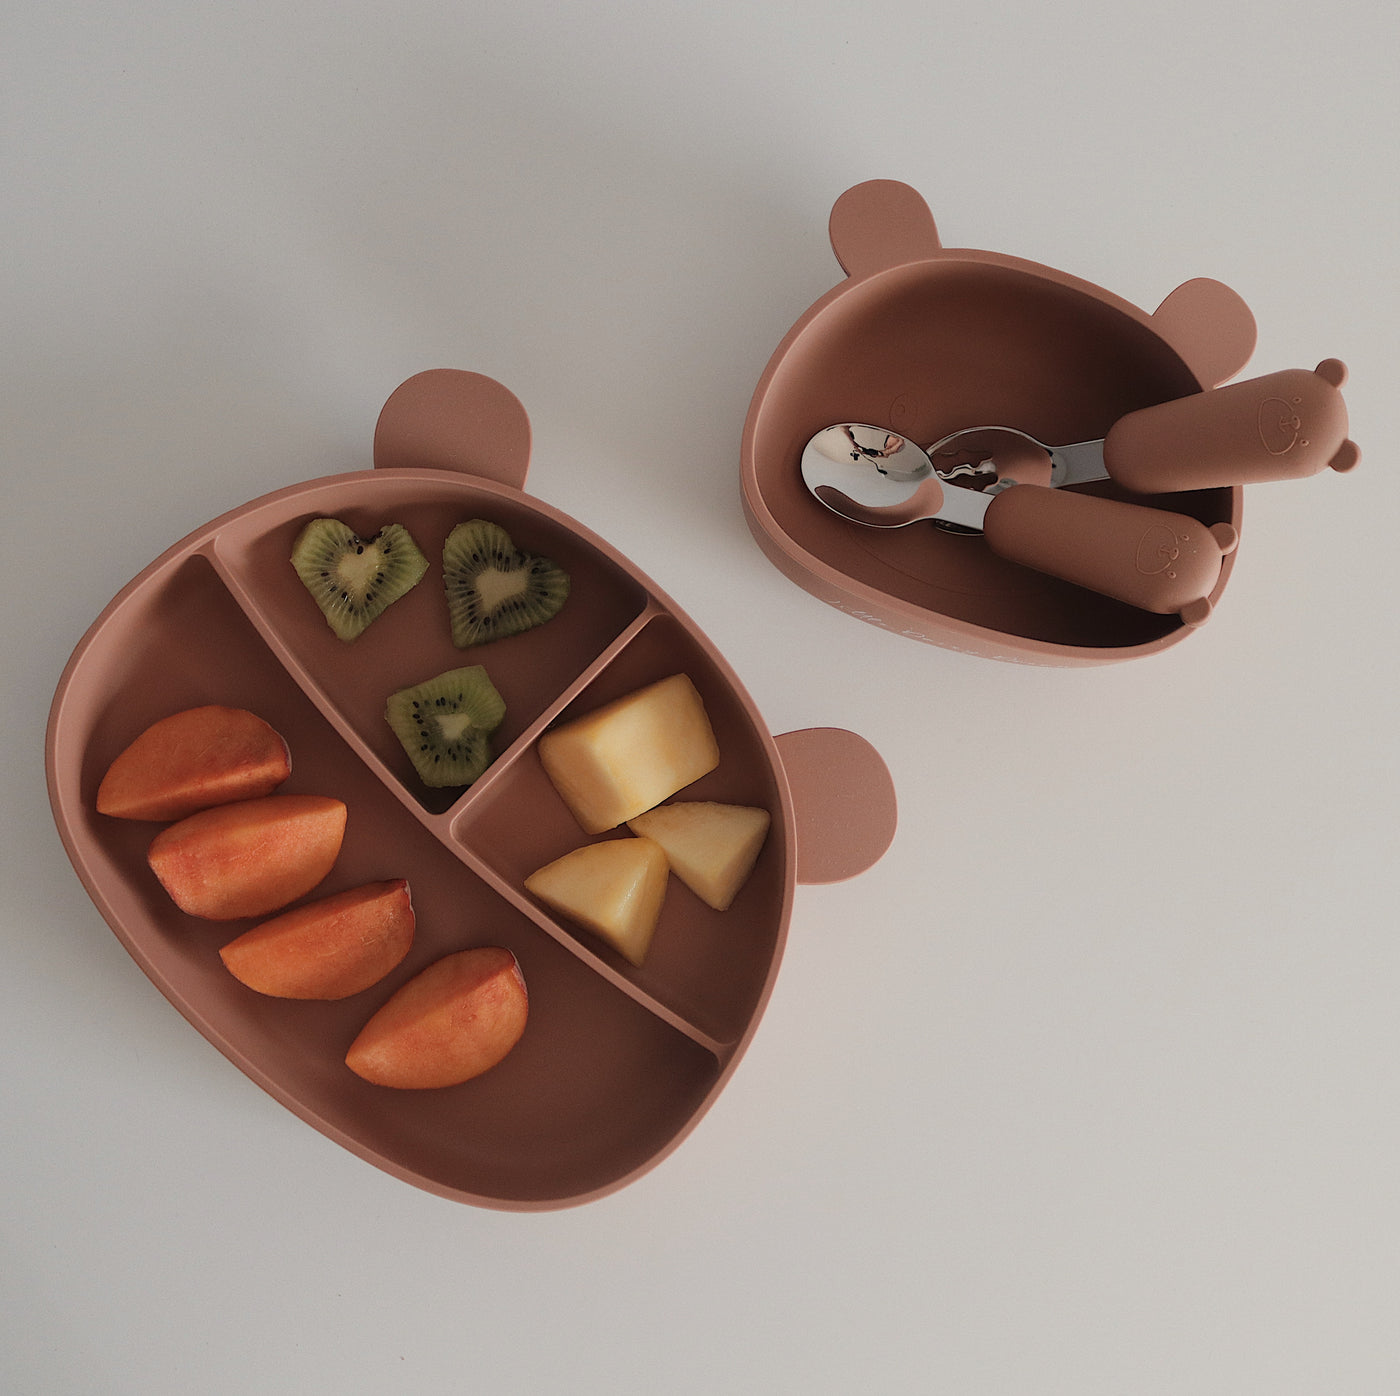 Bear Divider Tableware Set | Cappuccino